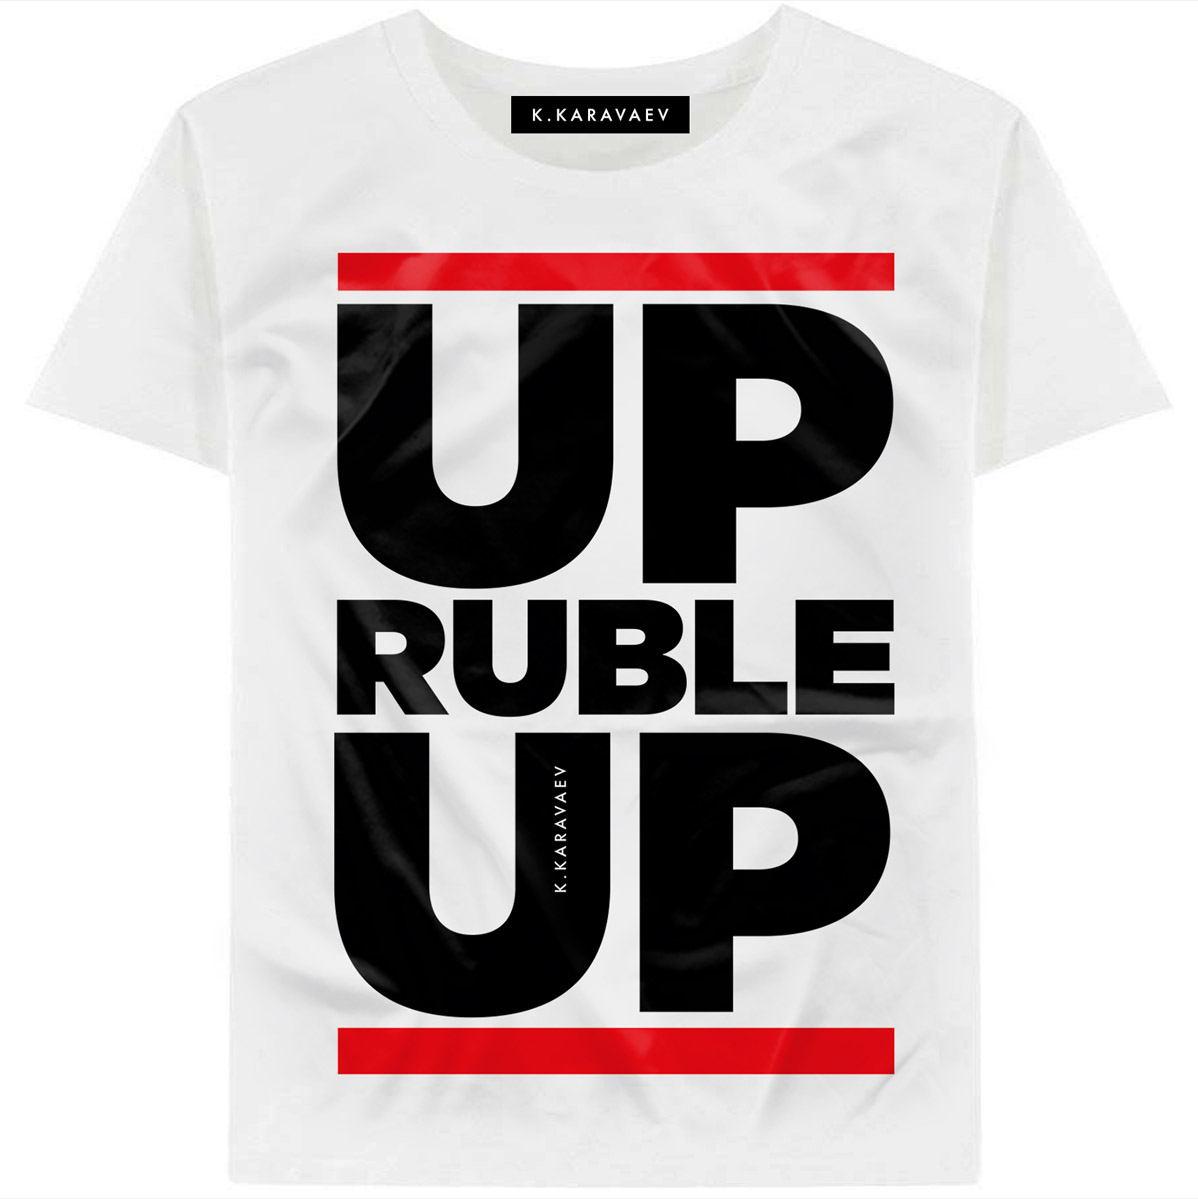 Рублей футболки. Футболка рубль. Ruble Rules футболка. Где купить футболку rubles.